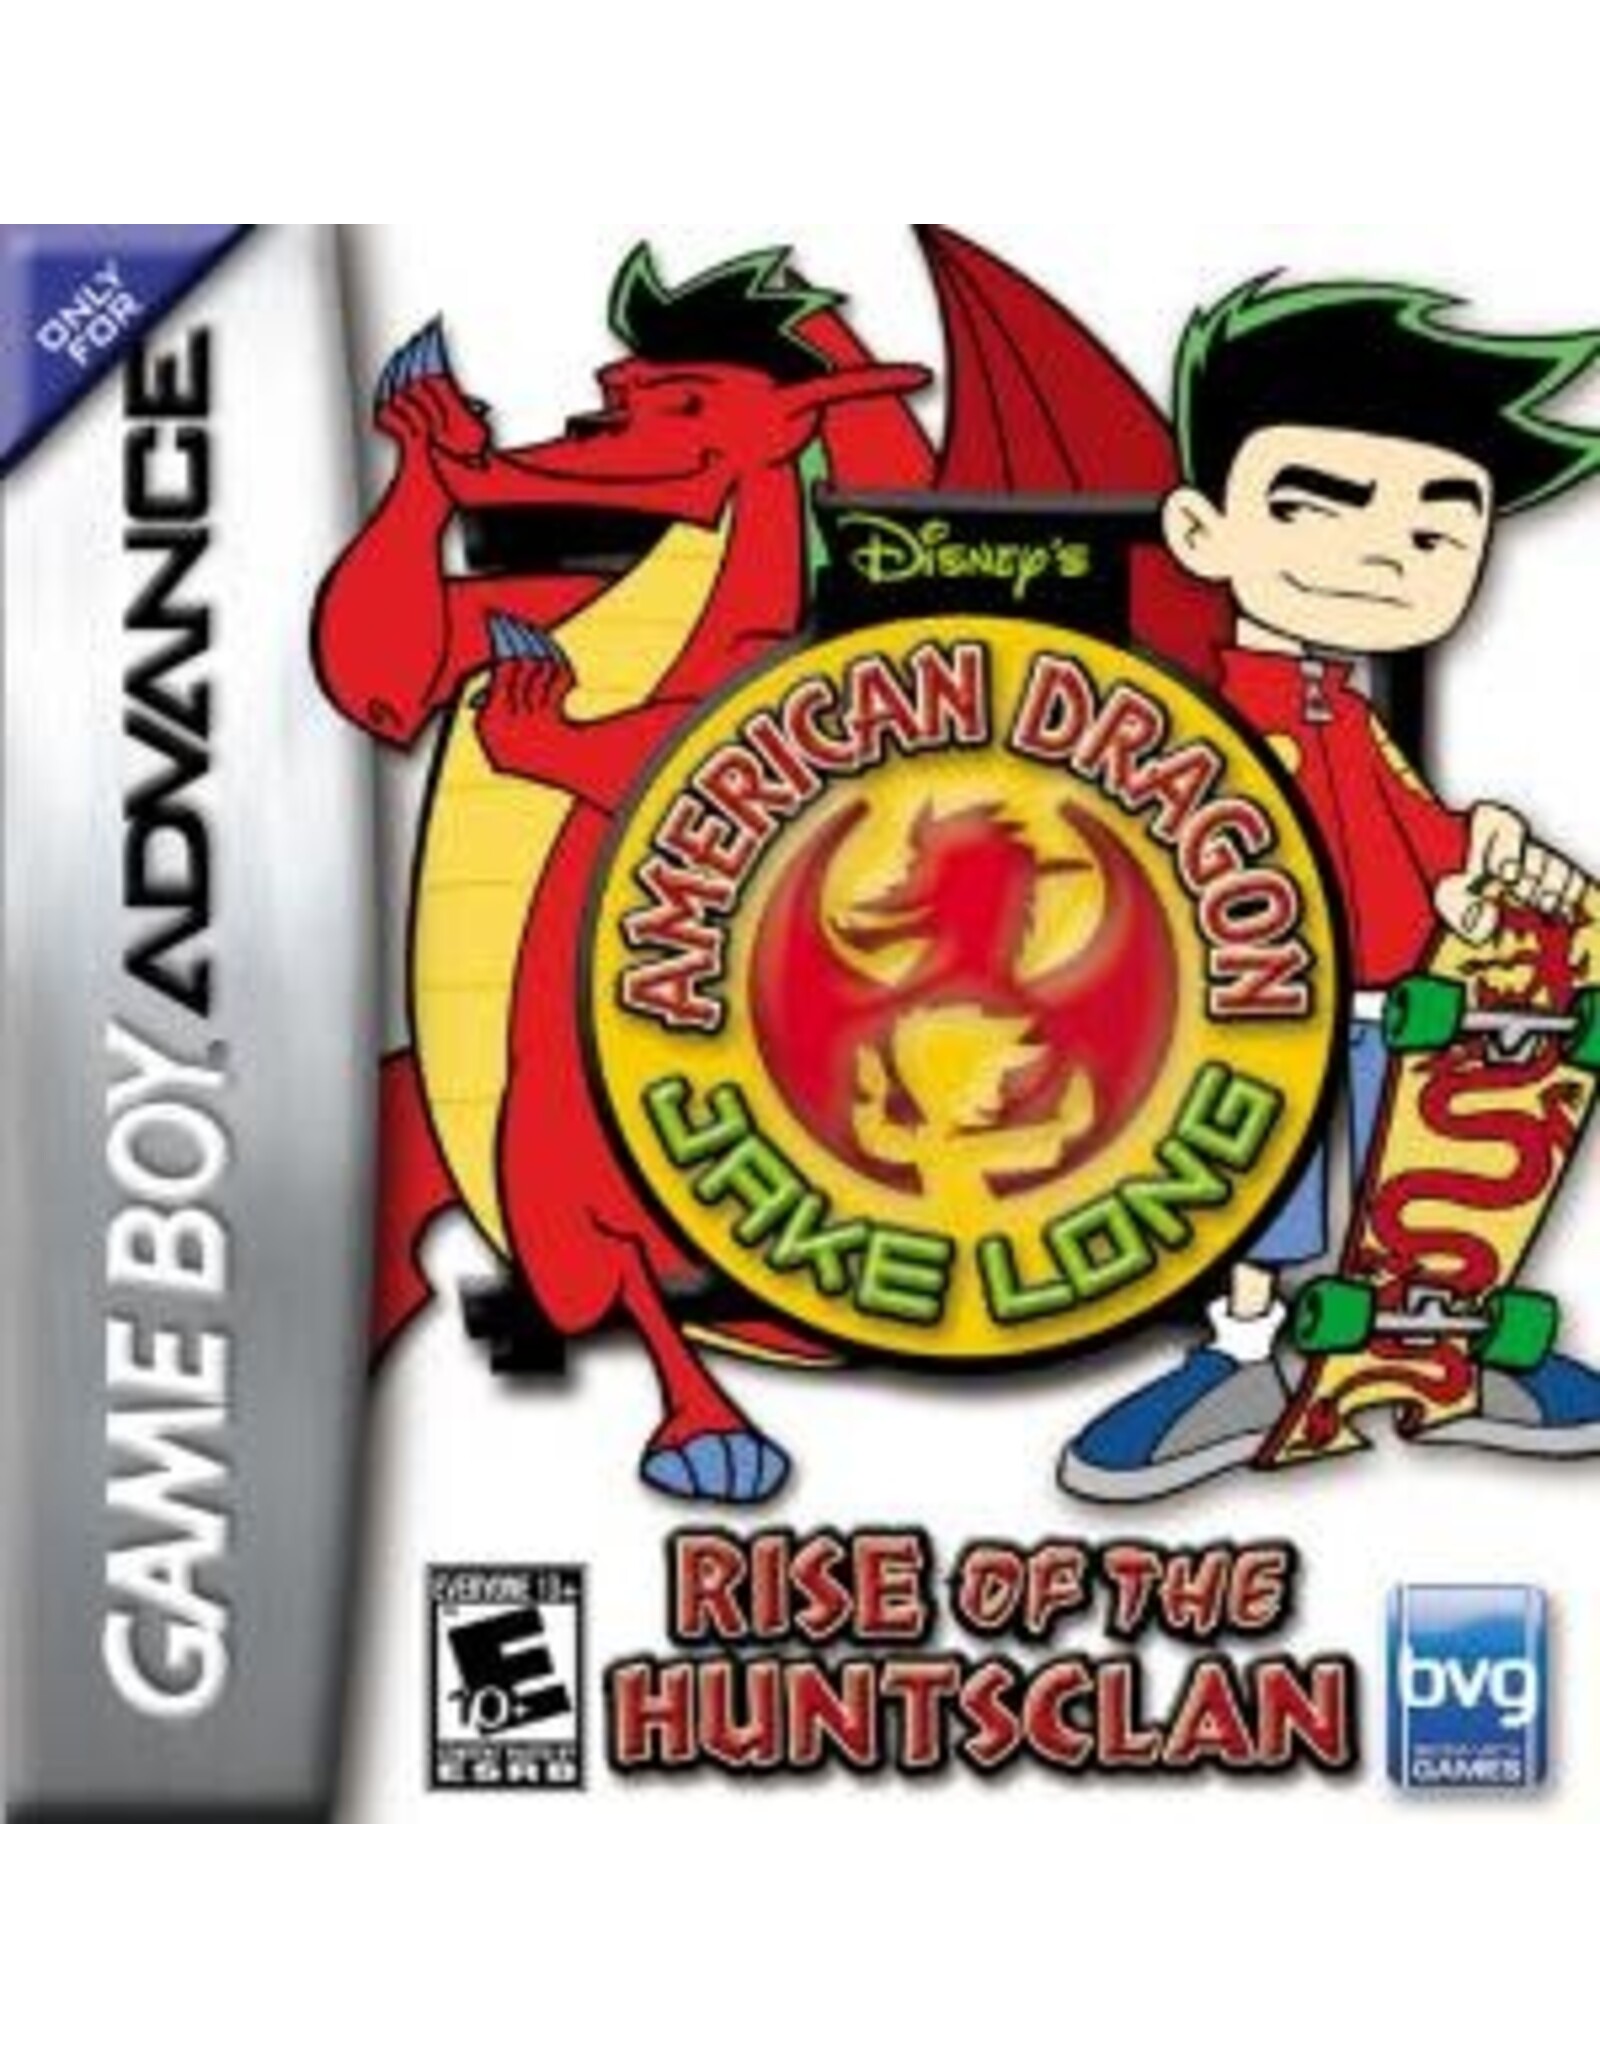 Game Boy Advance American Dragon Jake Long Rise of the Huntsclan (Cart Only, Damaged Label)